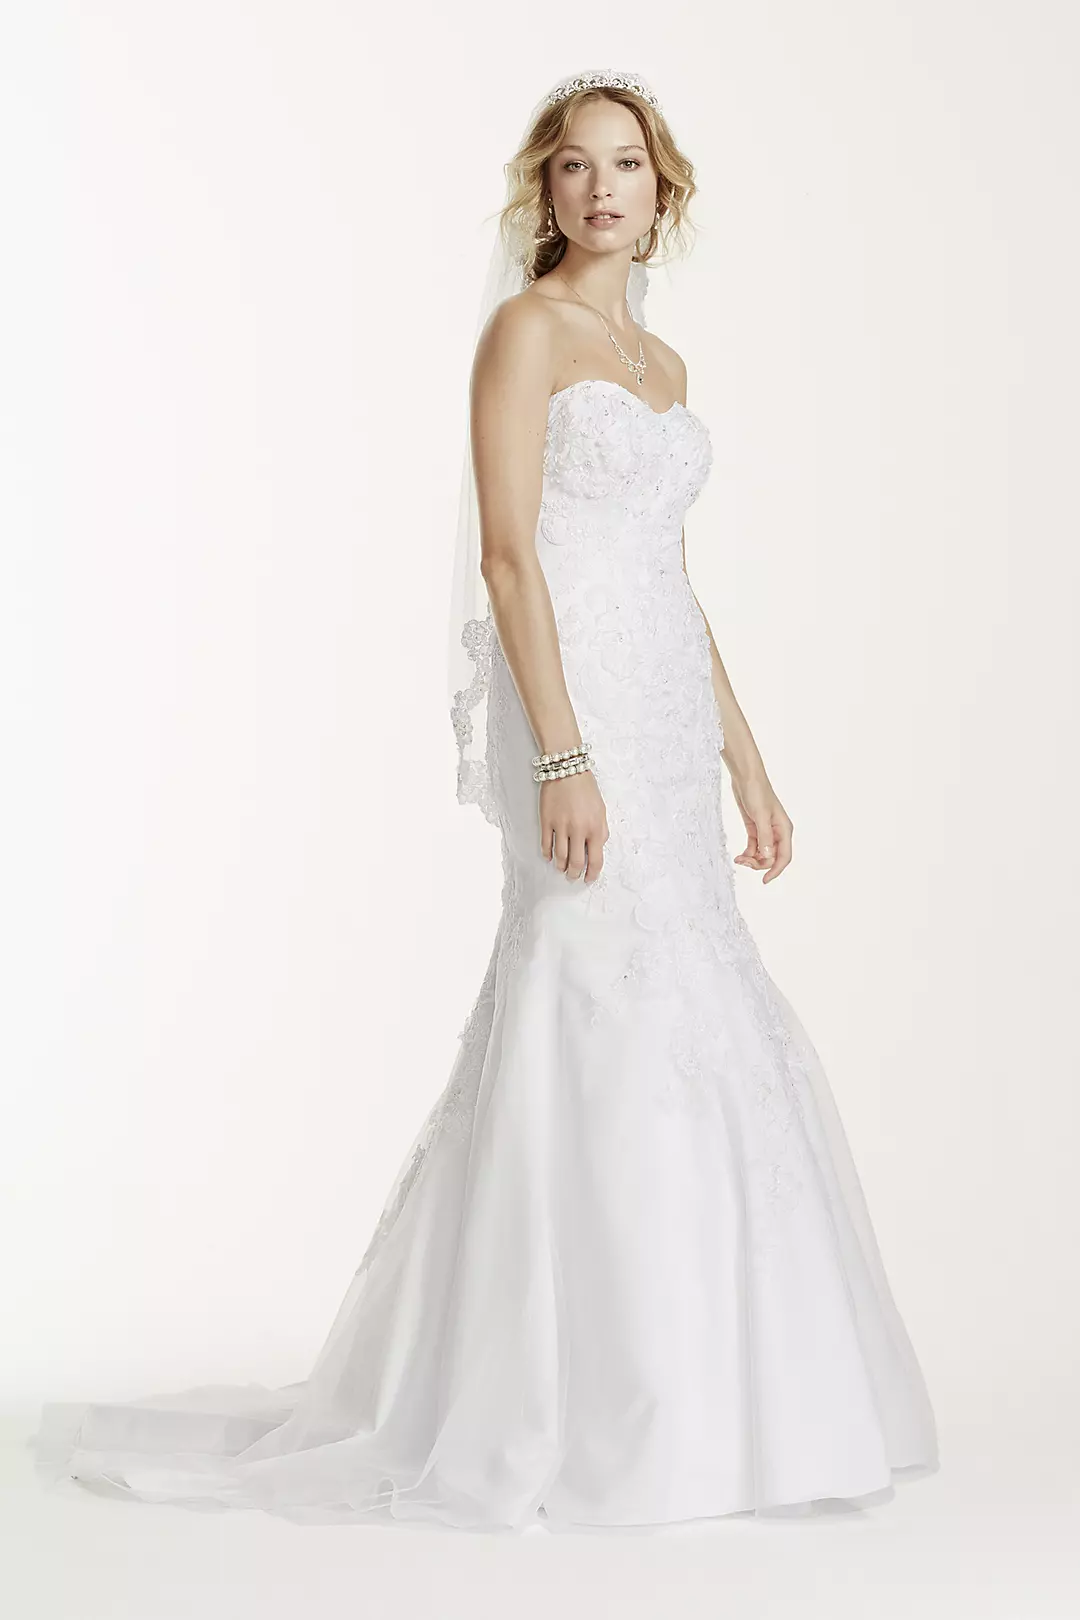 Jewel Tulle Over Satin Wedding Dress with Soutache Image